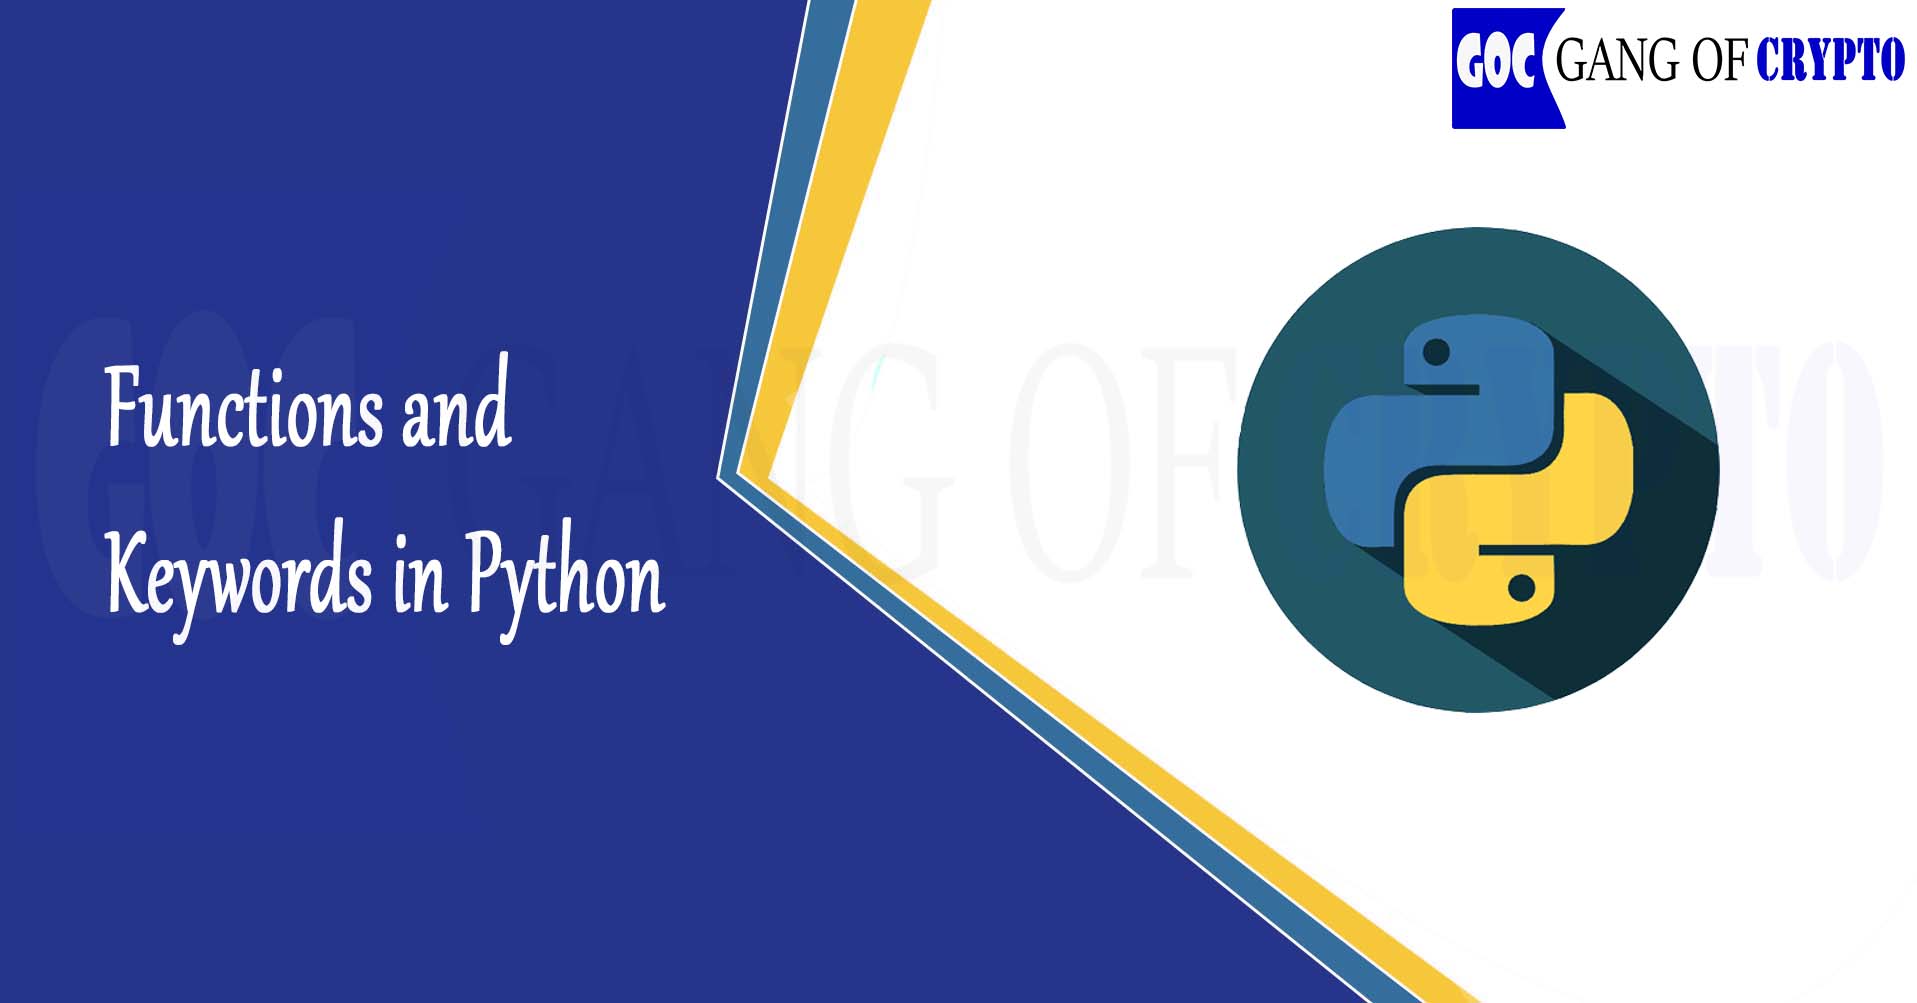 function-and-keywords-in-python-Gangofcrypto